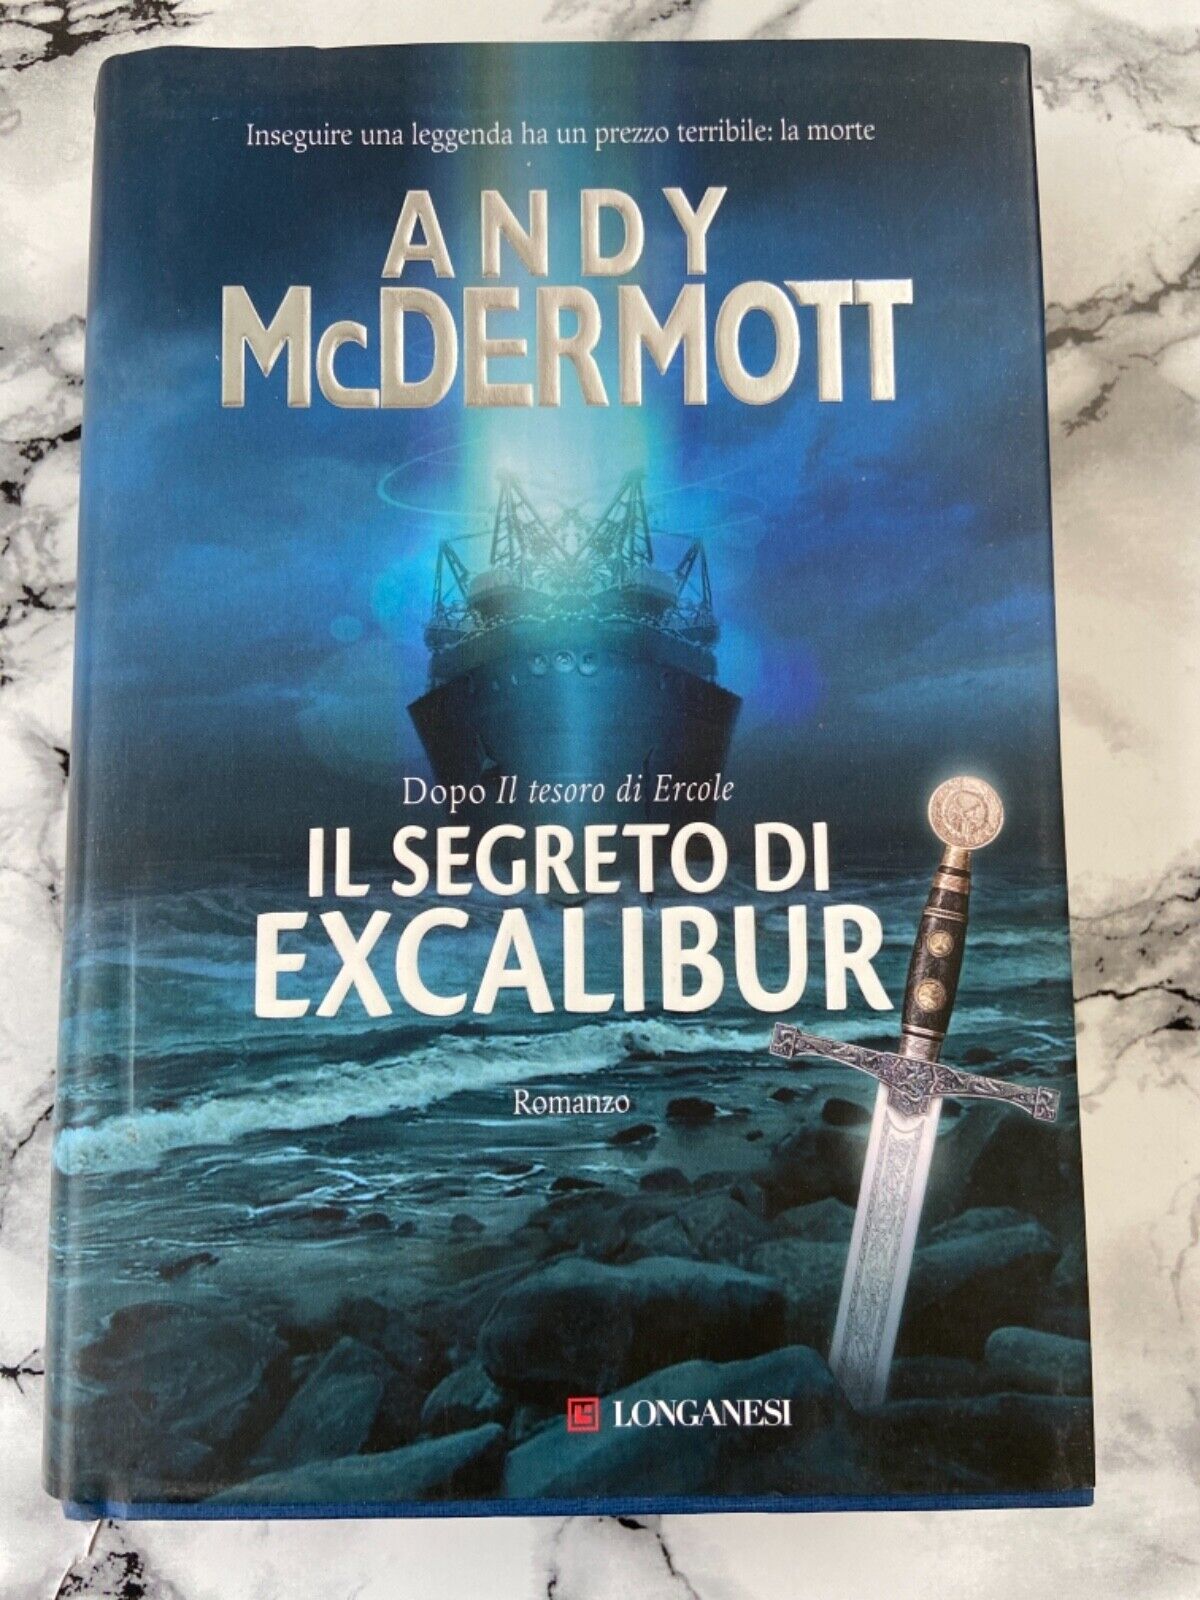 A. McDermott - The Secret of Excalibur